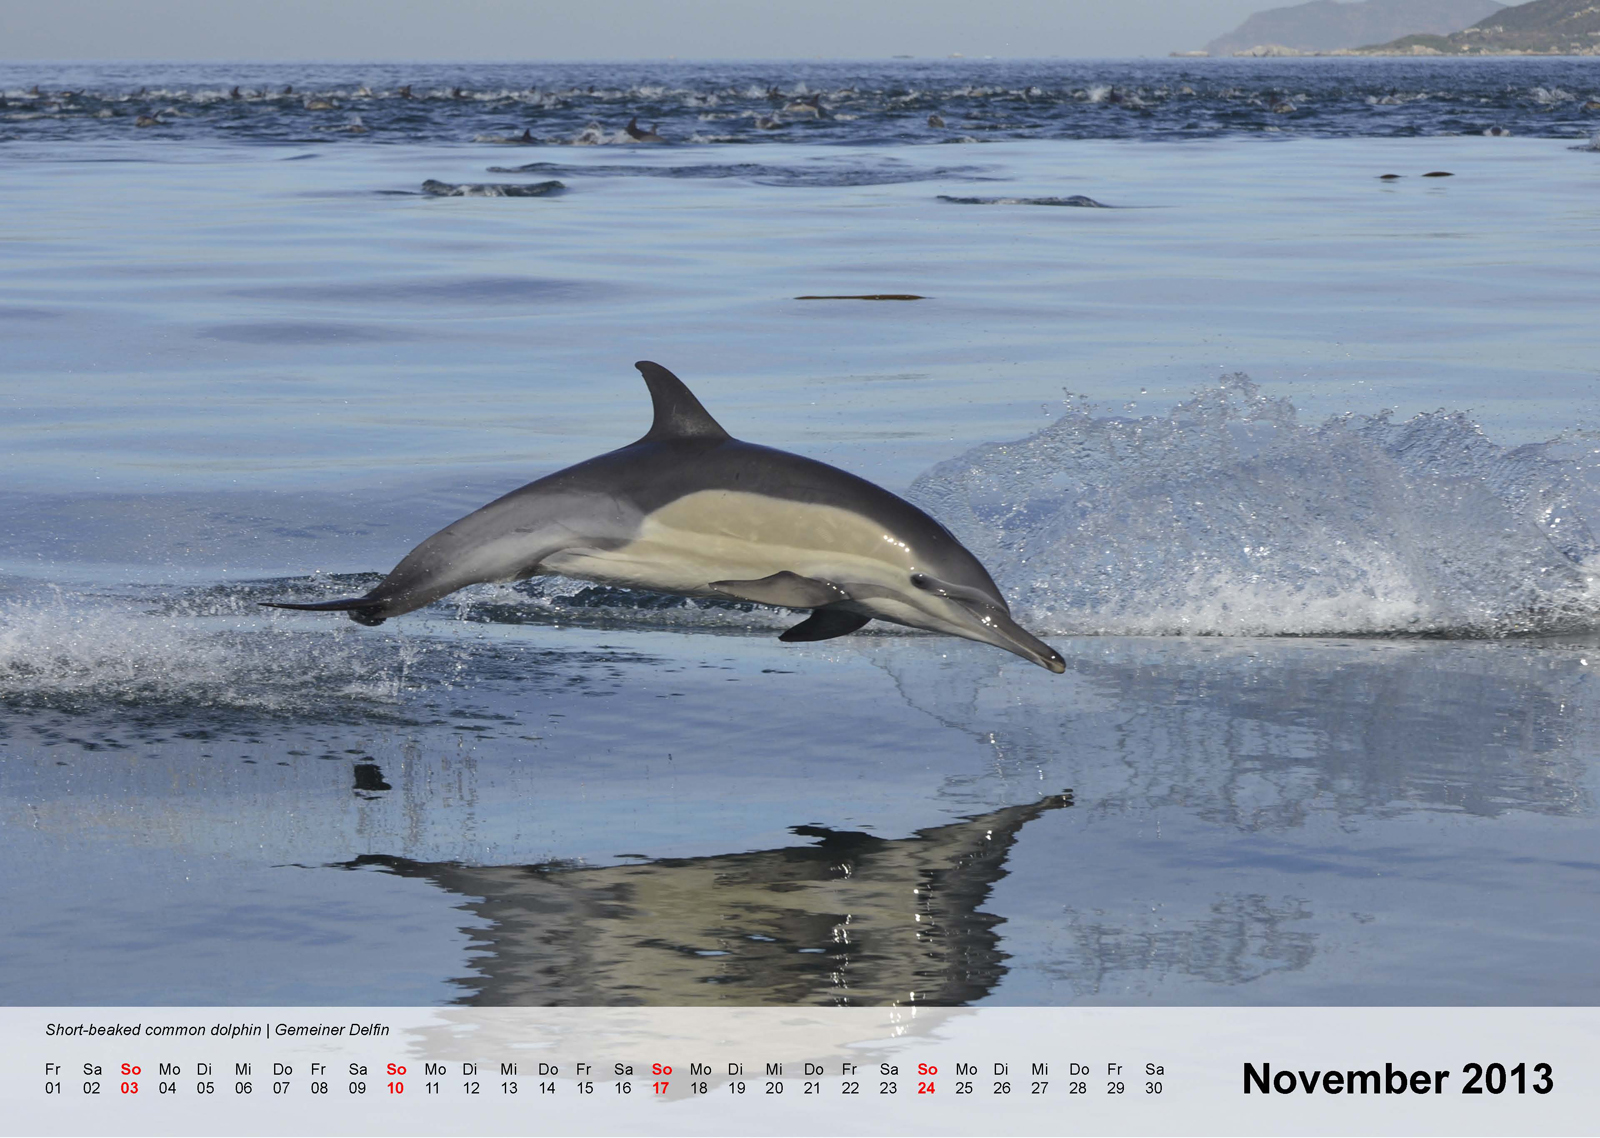 Short-beaked common dolphin | Gemeiner Delfin - Kalender 2013 - November